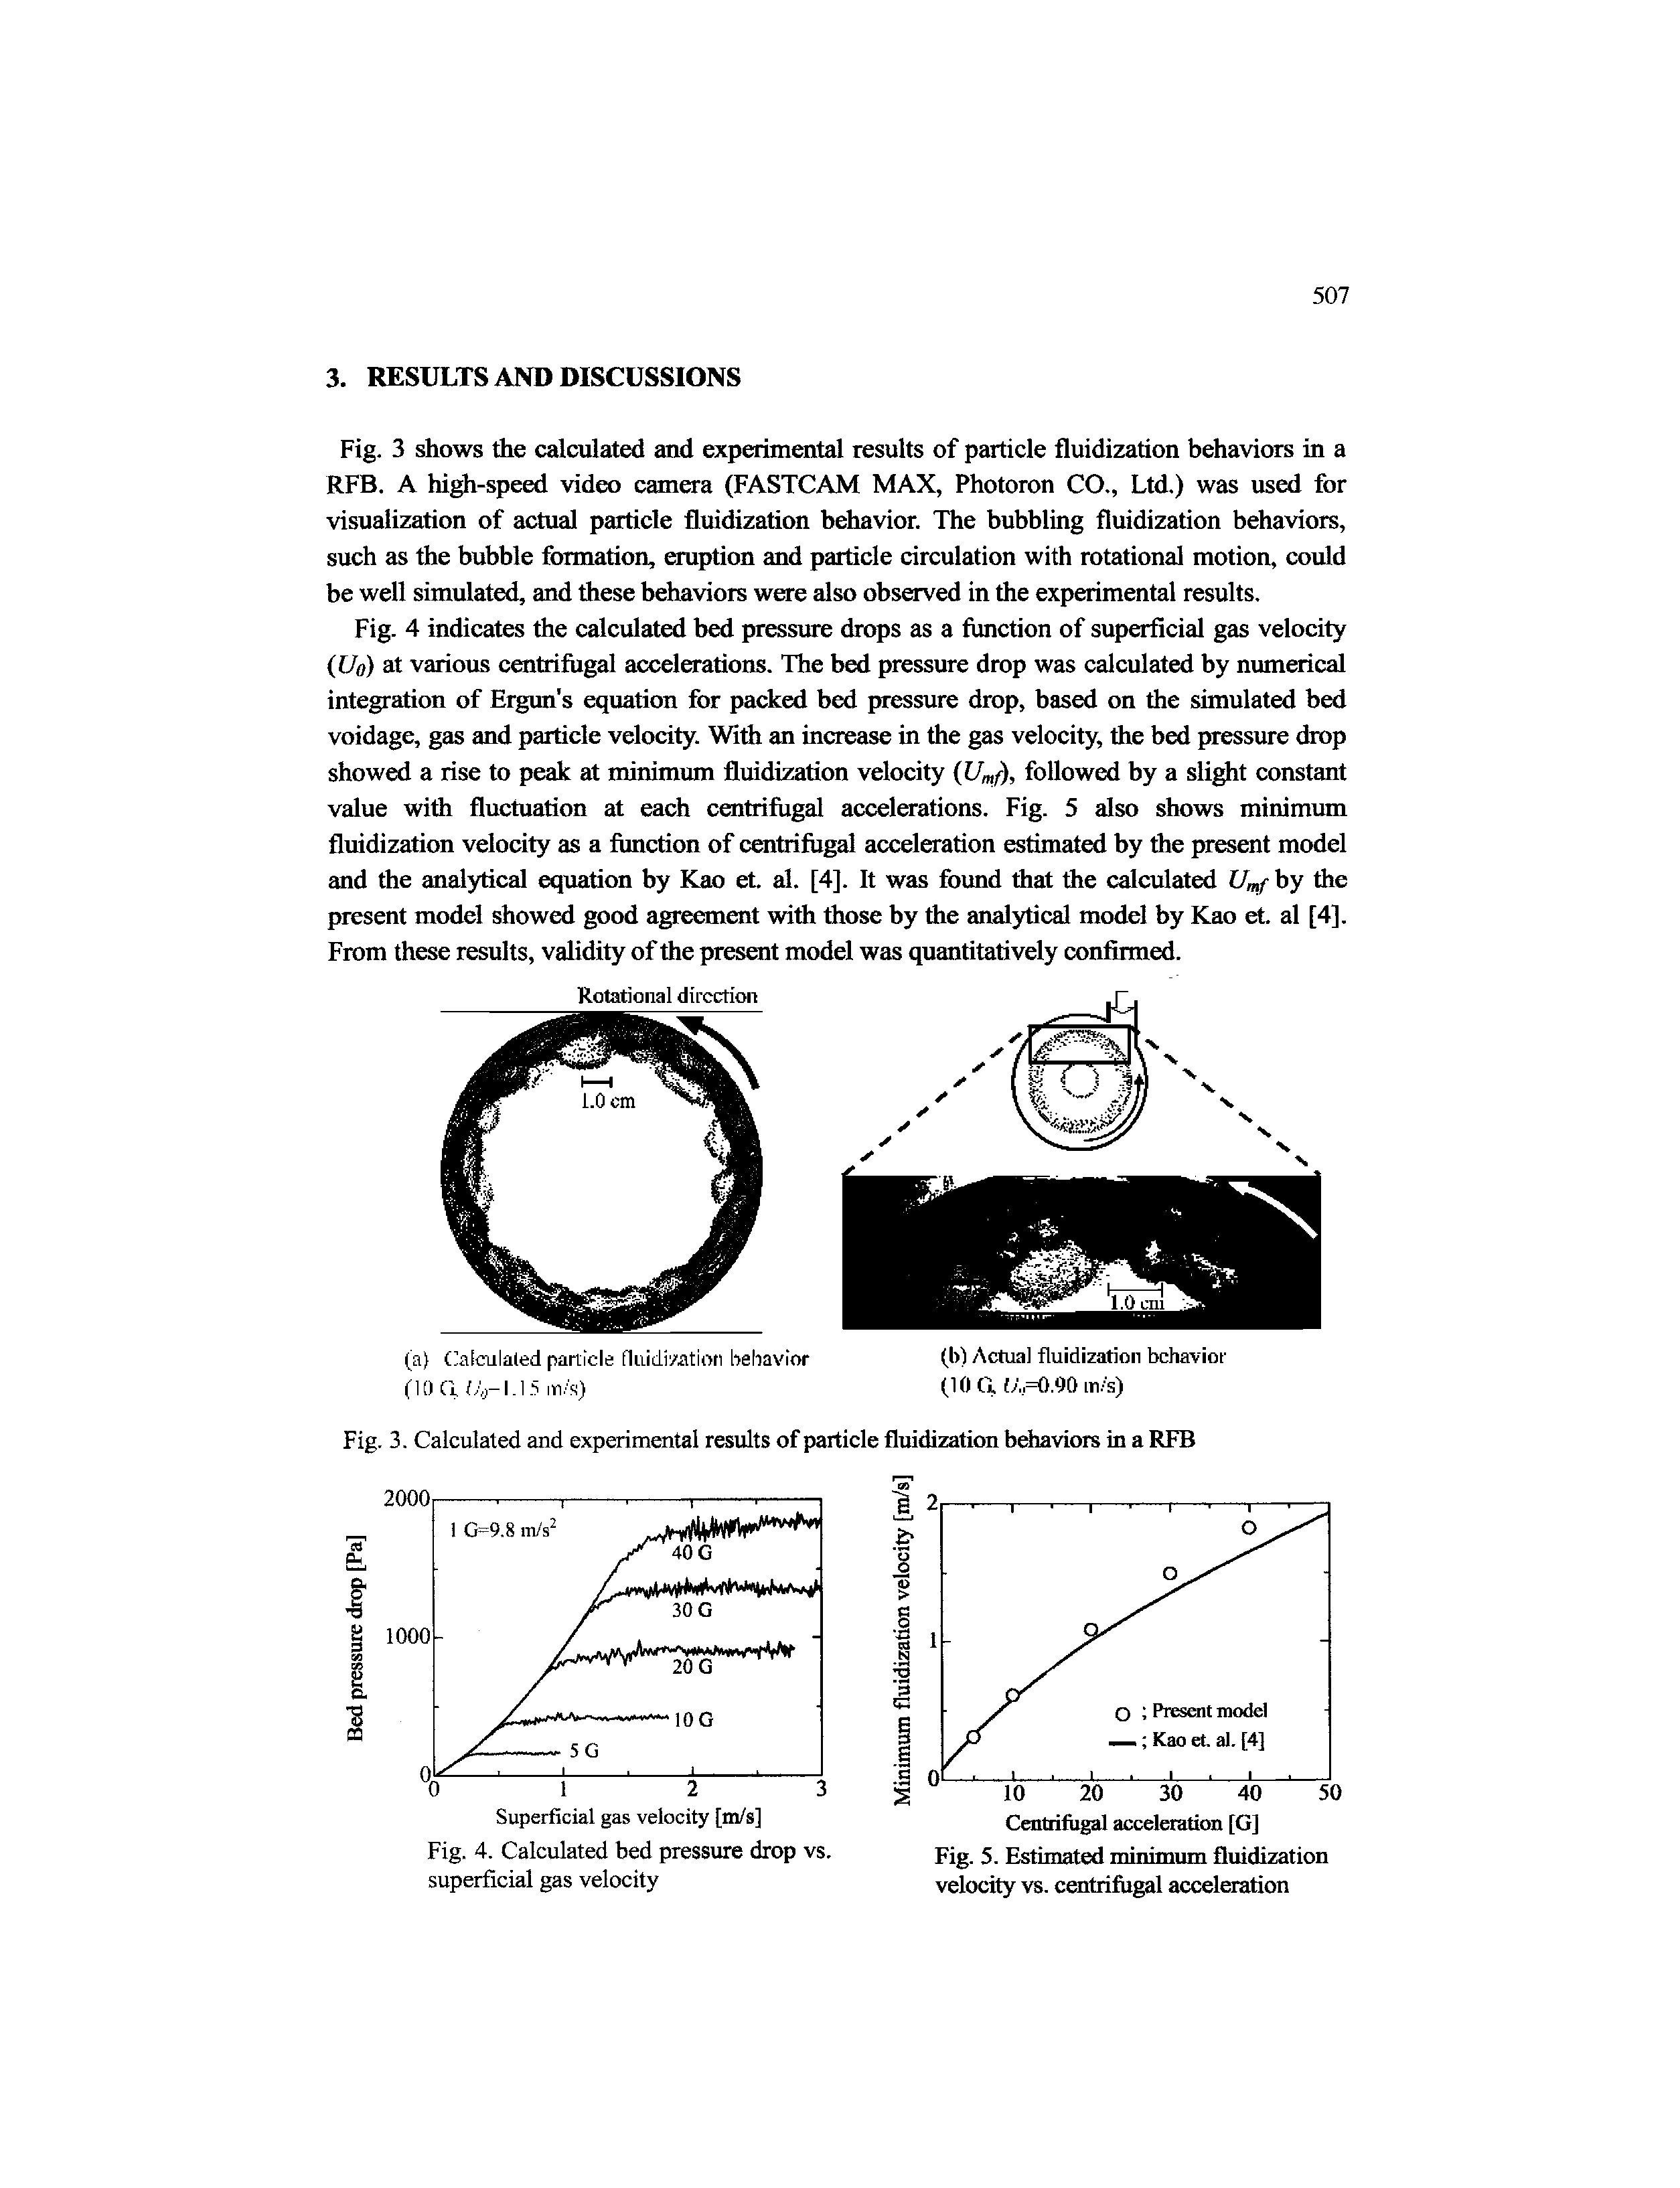 Fig. 5. Estimated minimum fluidization velocity vs. centrifugal acceleration...